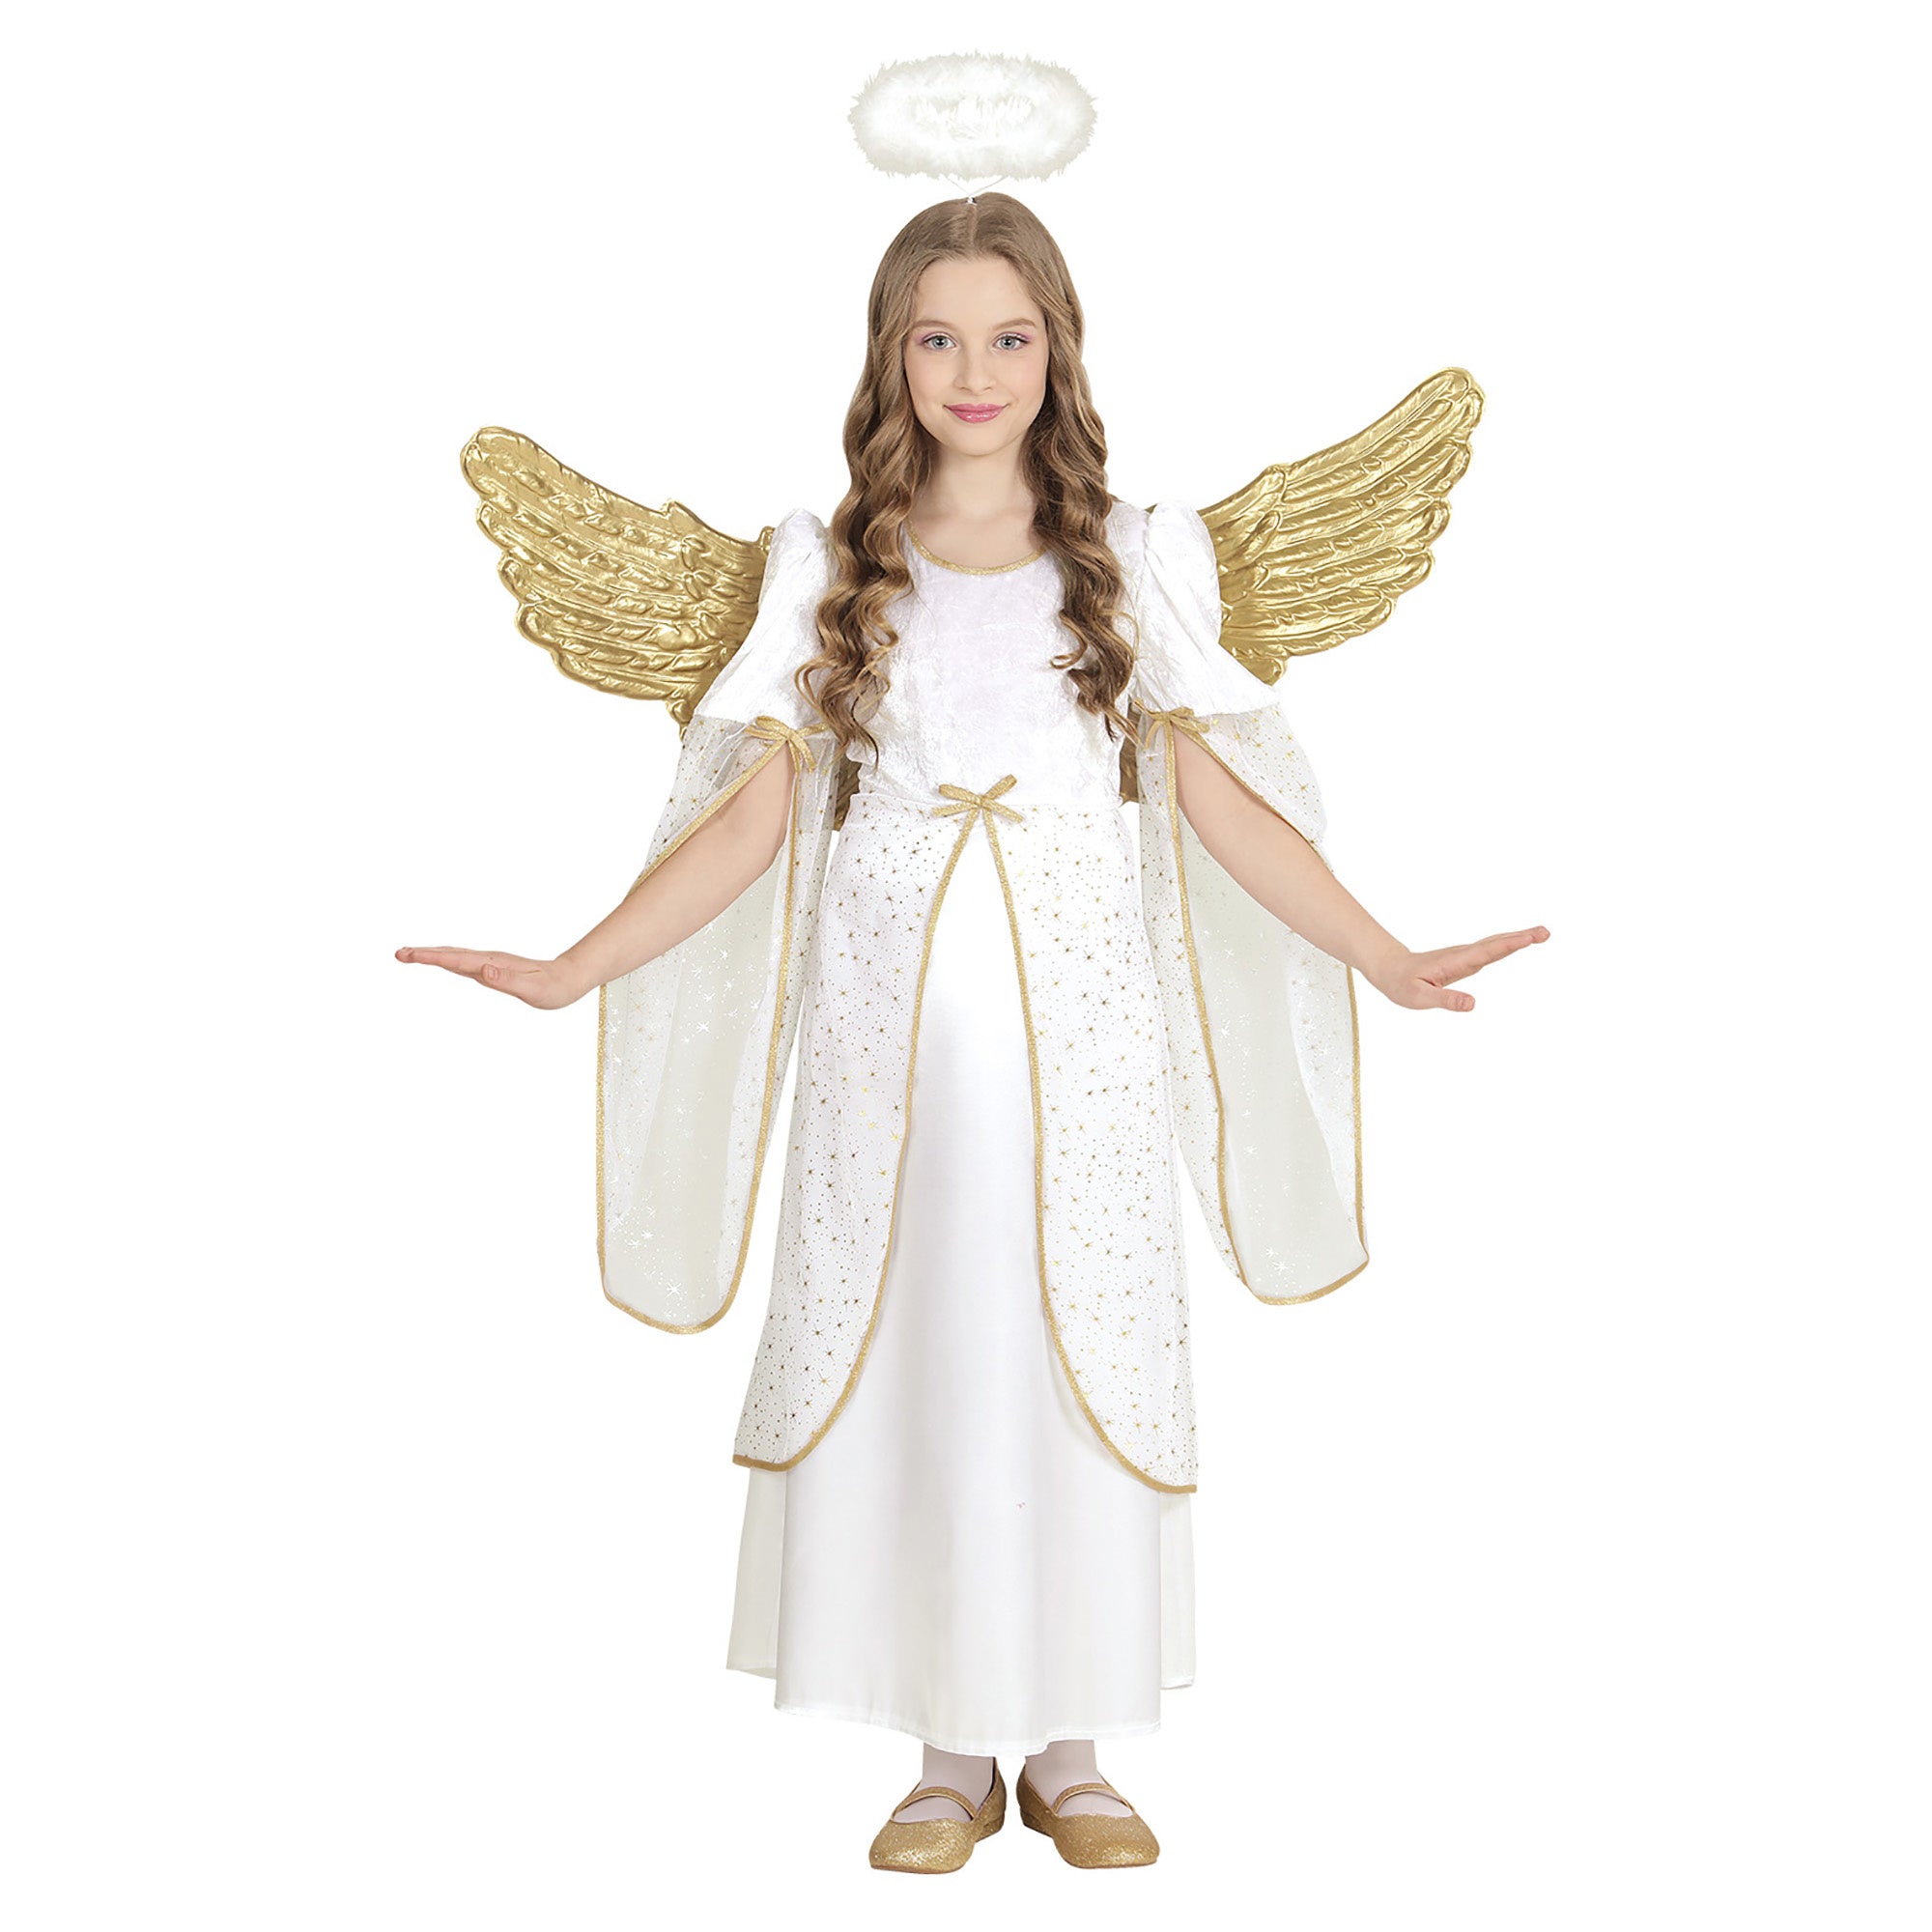 Widmann - Engel Kostuum - Hemelse Engel Kind - Meisje - wit / beige - Maat 140 - Carnavalskleding - Verkleedkleding